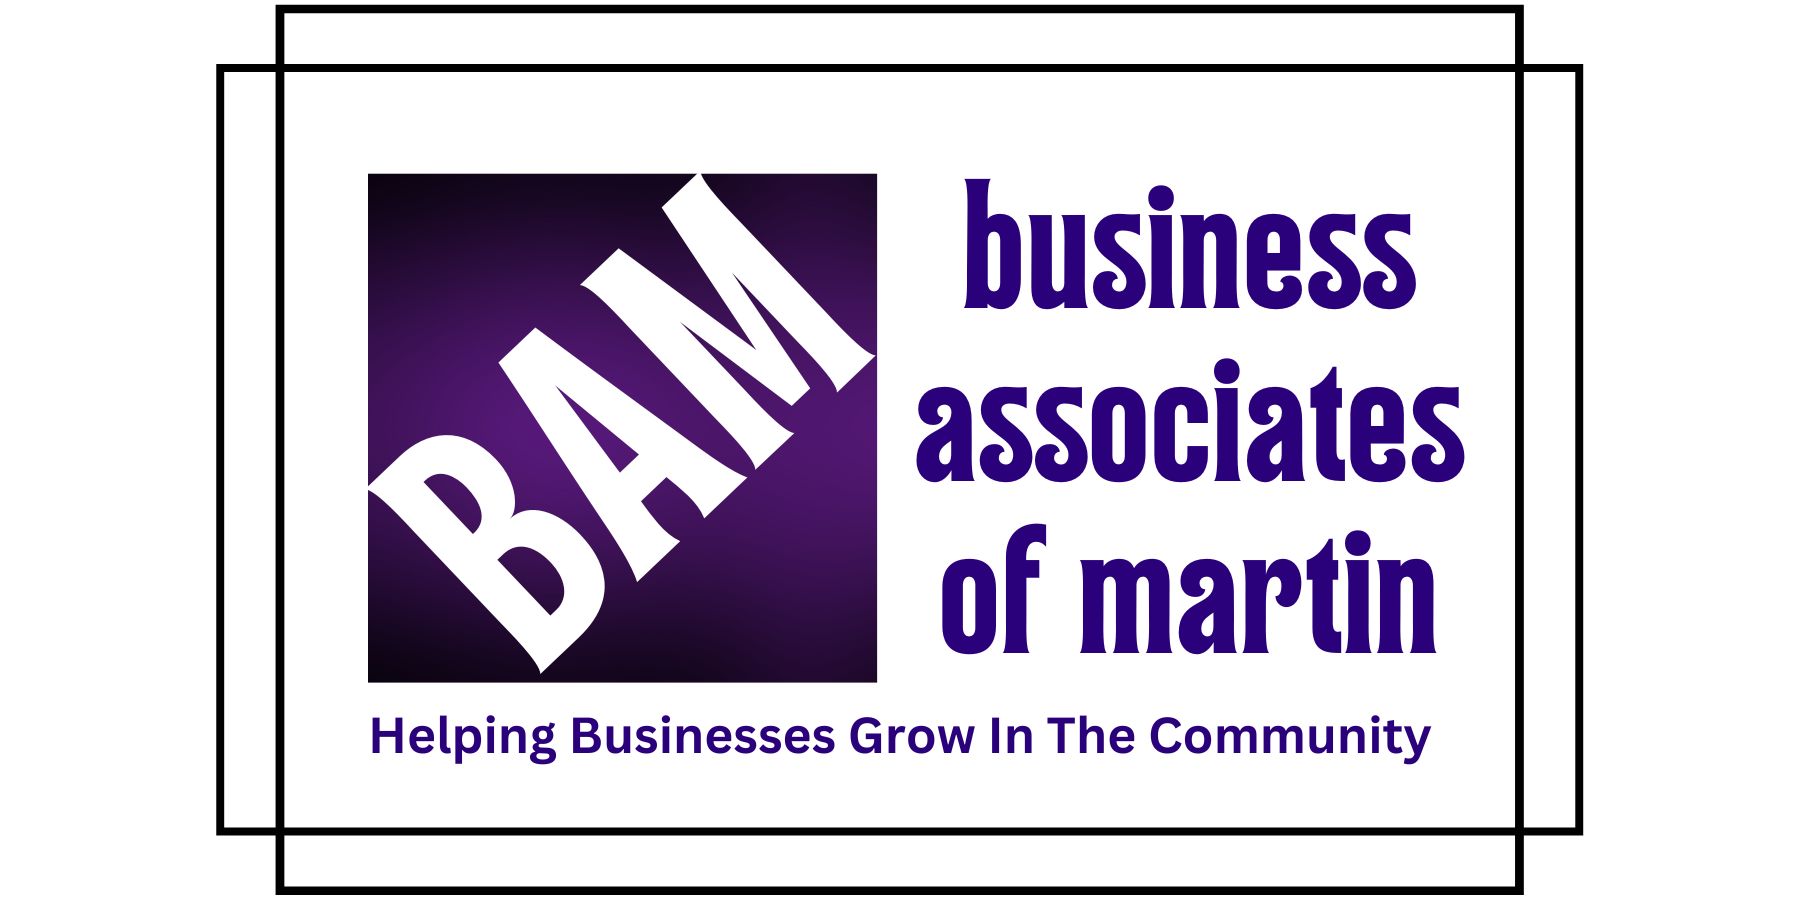 BAM - Business Associates of Martin County